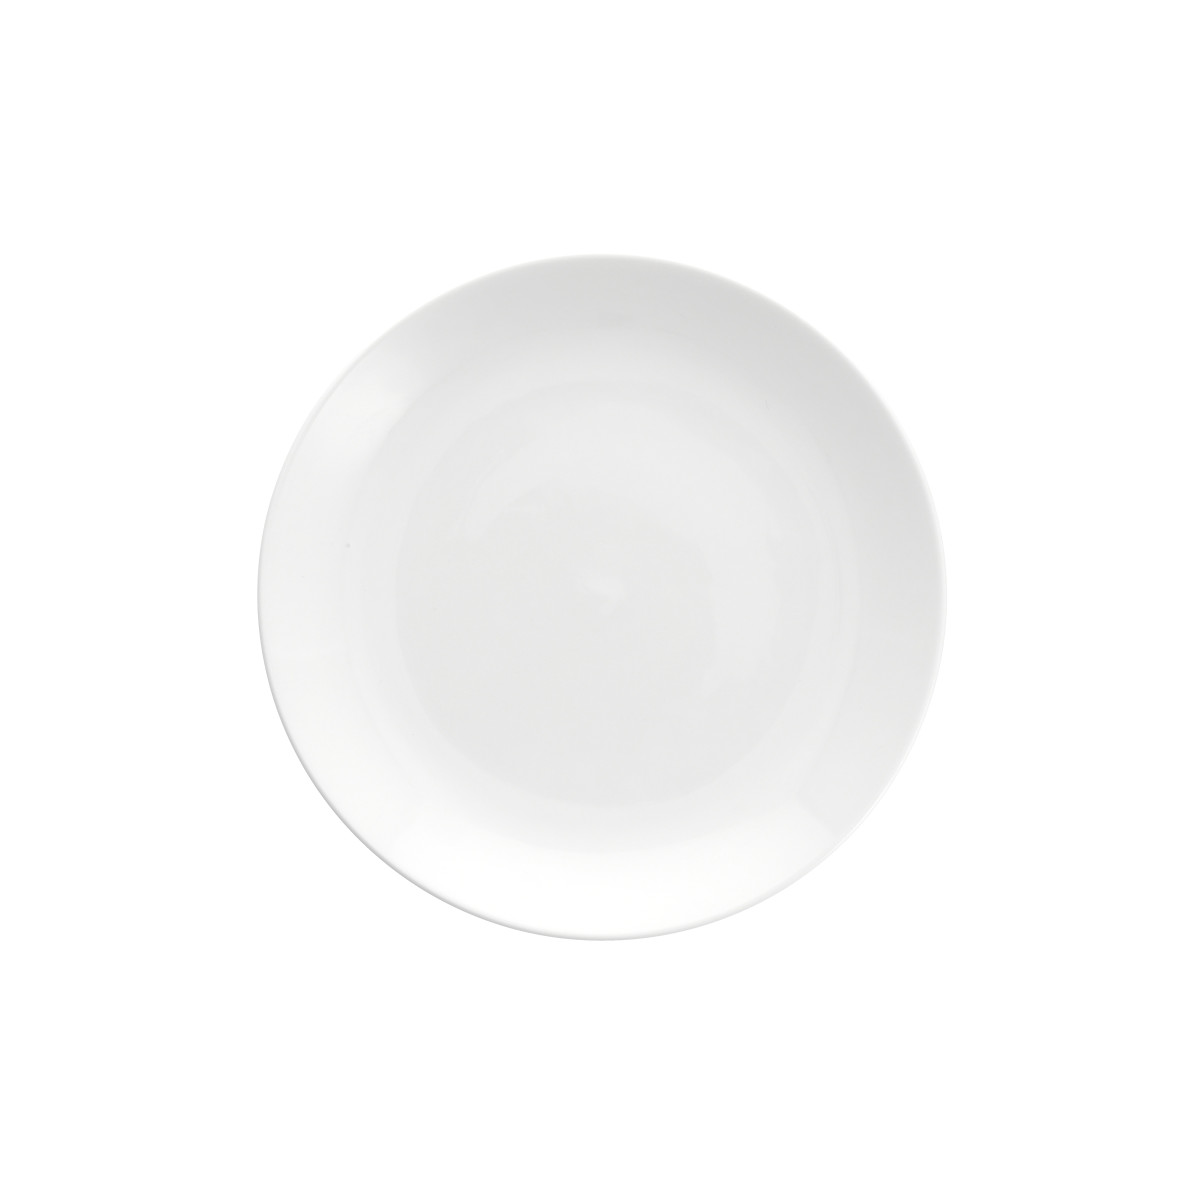 Caldera Coupe Dinner Plate 10.5"